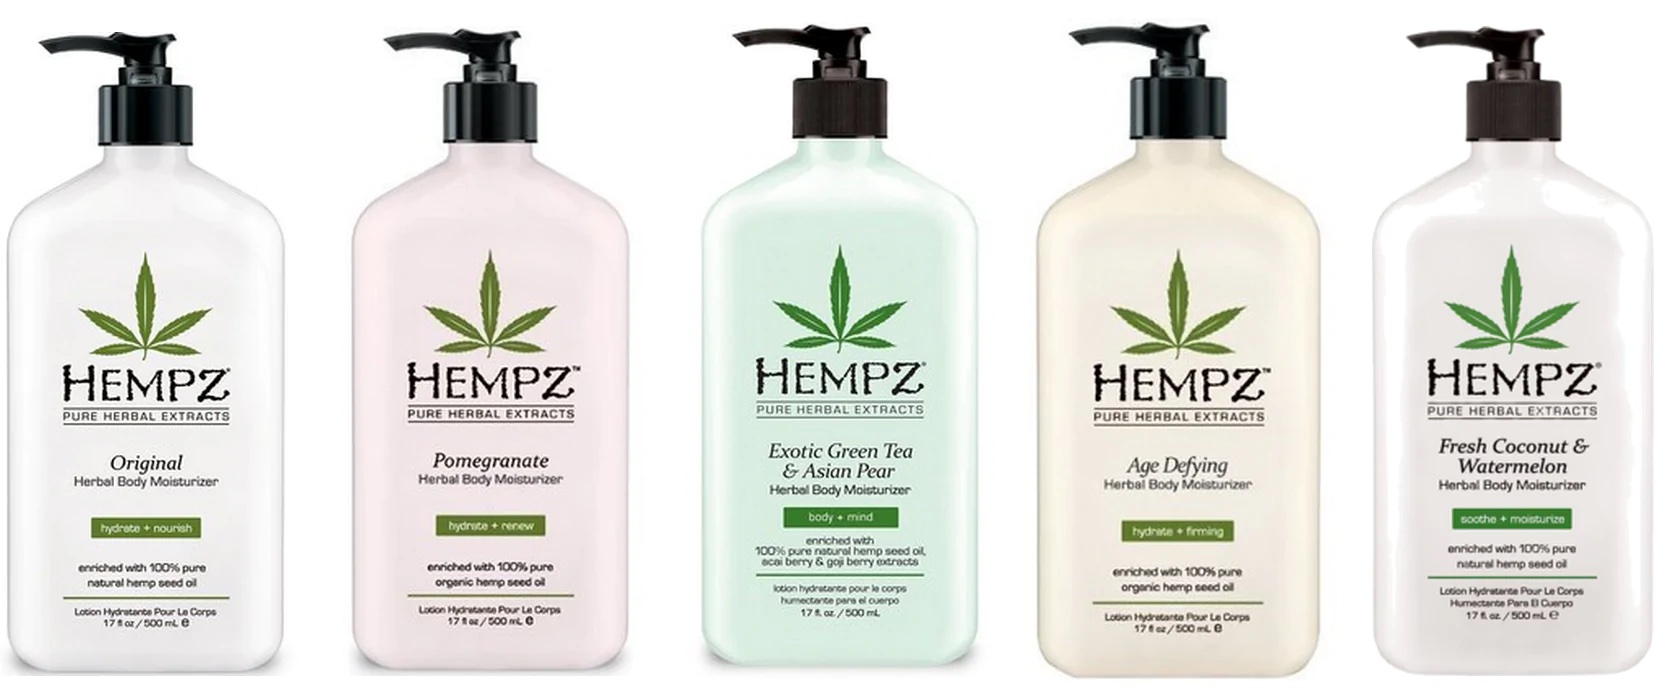 Hempz cruelty-free product range